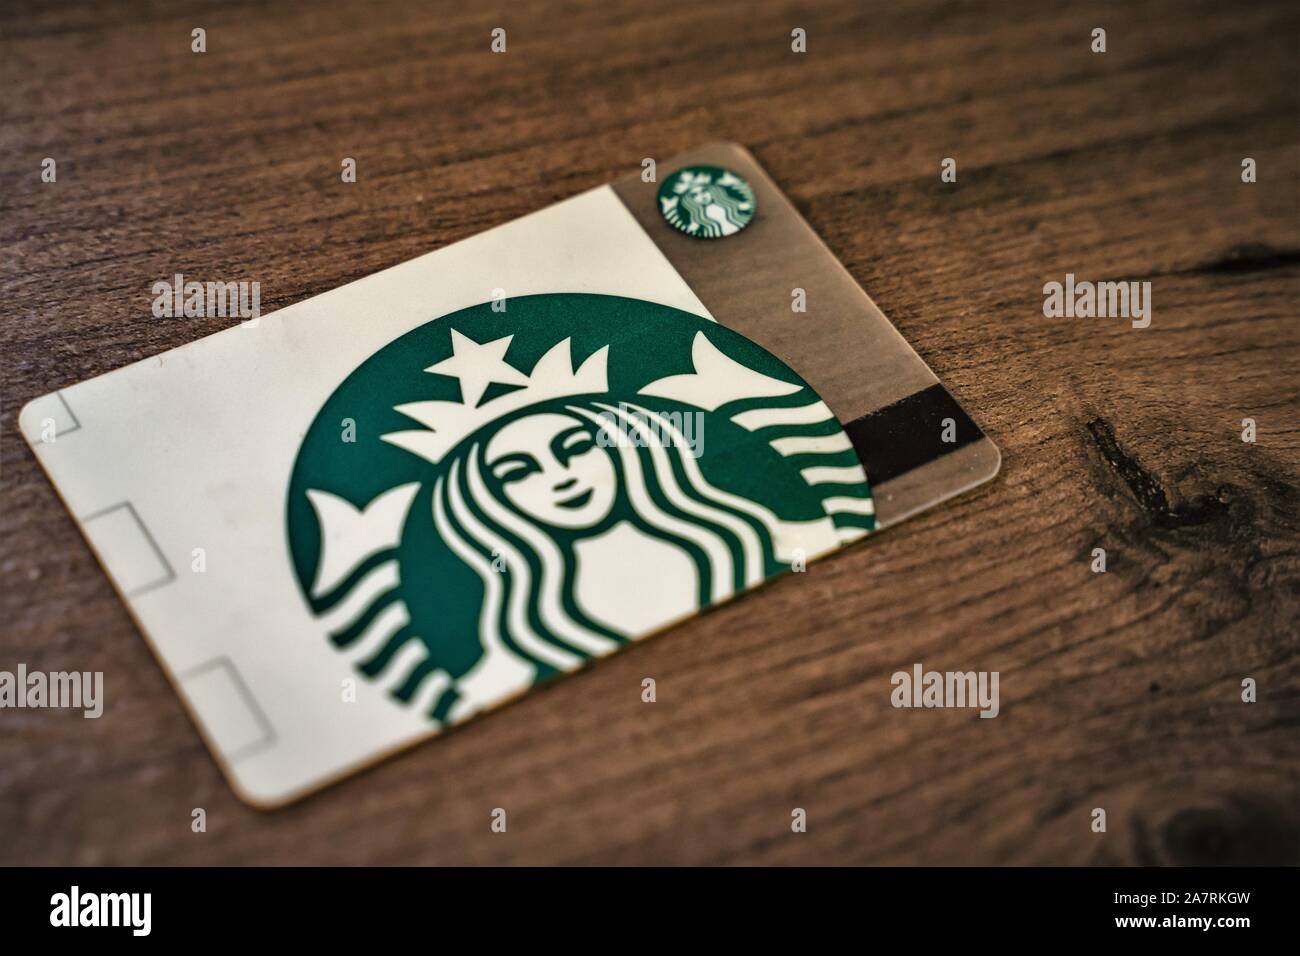 Starbucks Loyalty Card